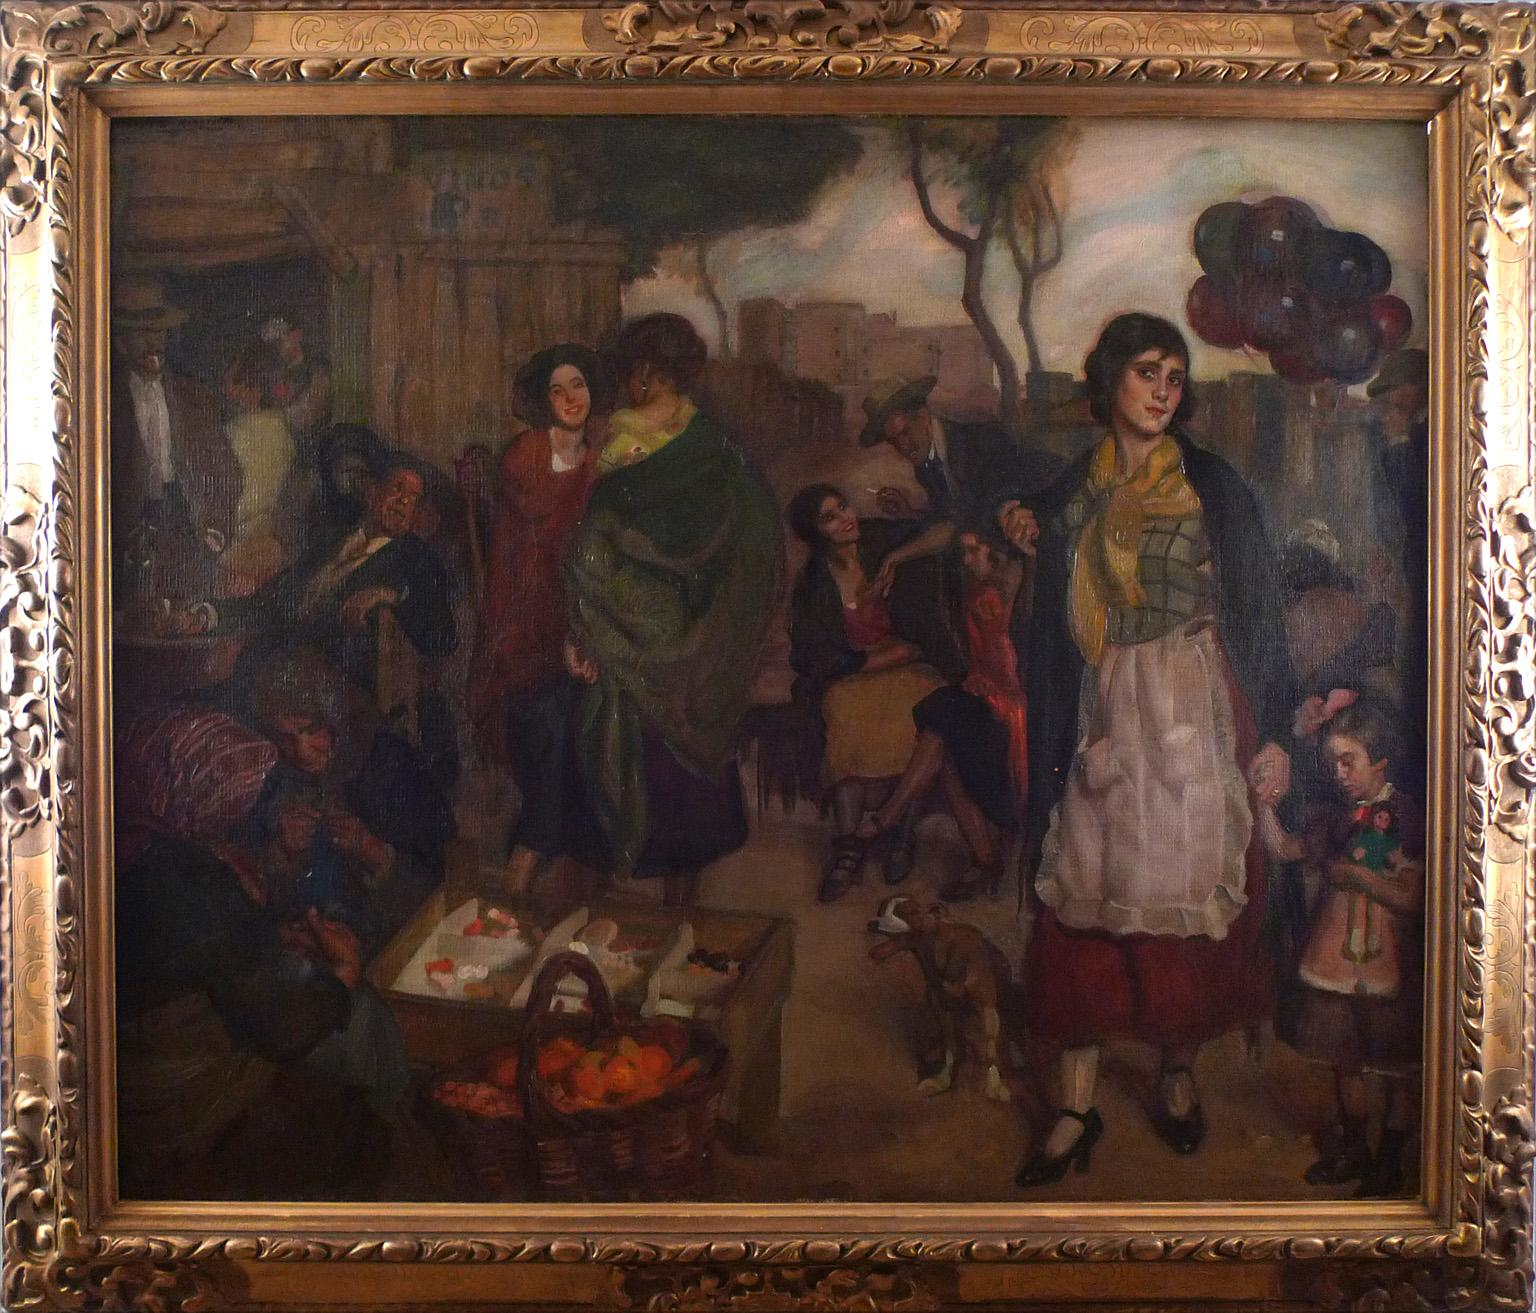 JOSÉ MARÍA LÓPEZ MEZQUITA
Spanish, 1883 - 1954
DÍA DE MERCADO
signed "López Mezquita" (upper left)
oil on canvas
37-3/4 x 45-3/4 inches (95.5 x 116 cm.)
framed: 46 x 54 inches (117 x 137 cm.)

PROVENANCE
Collection of Nicolas Florencio Cortes Oliver